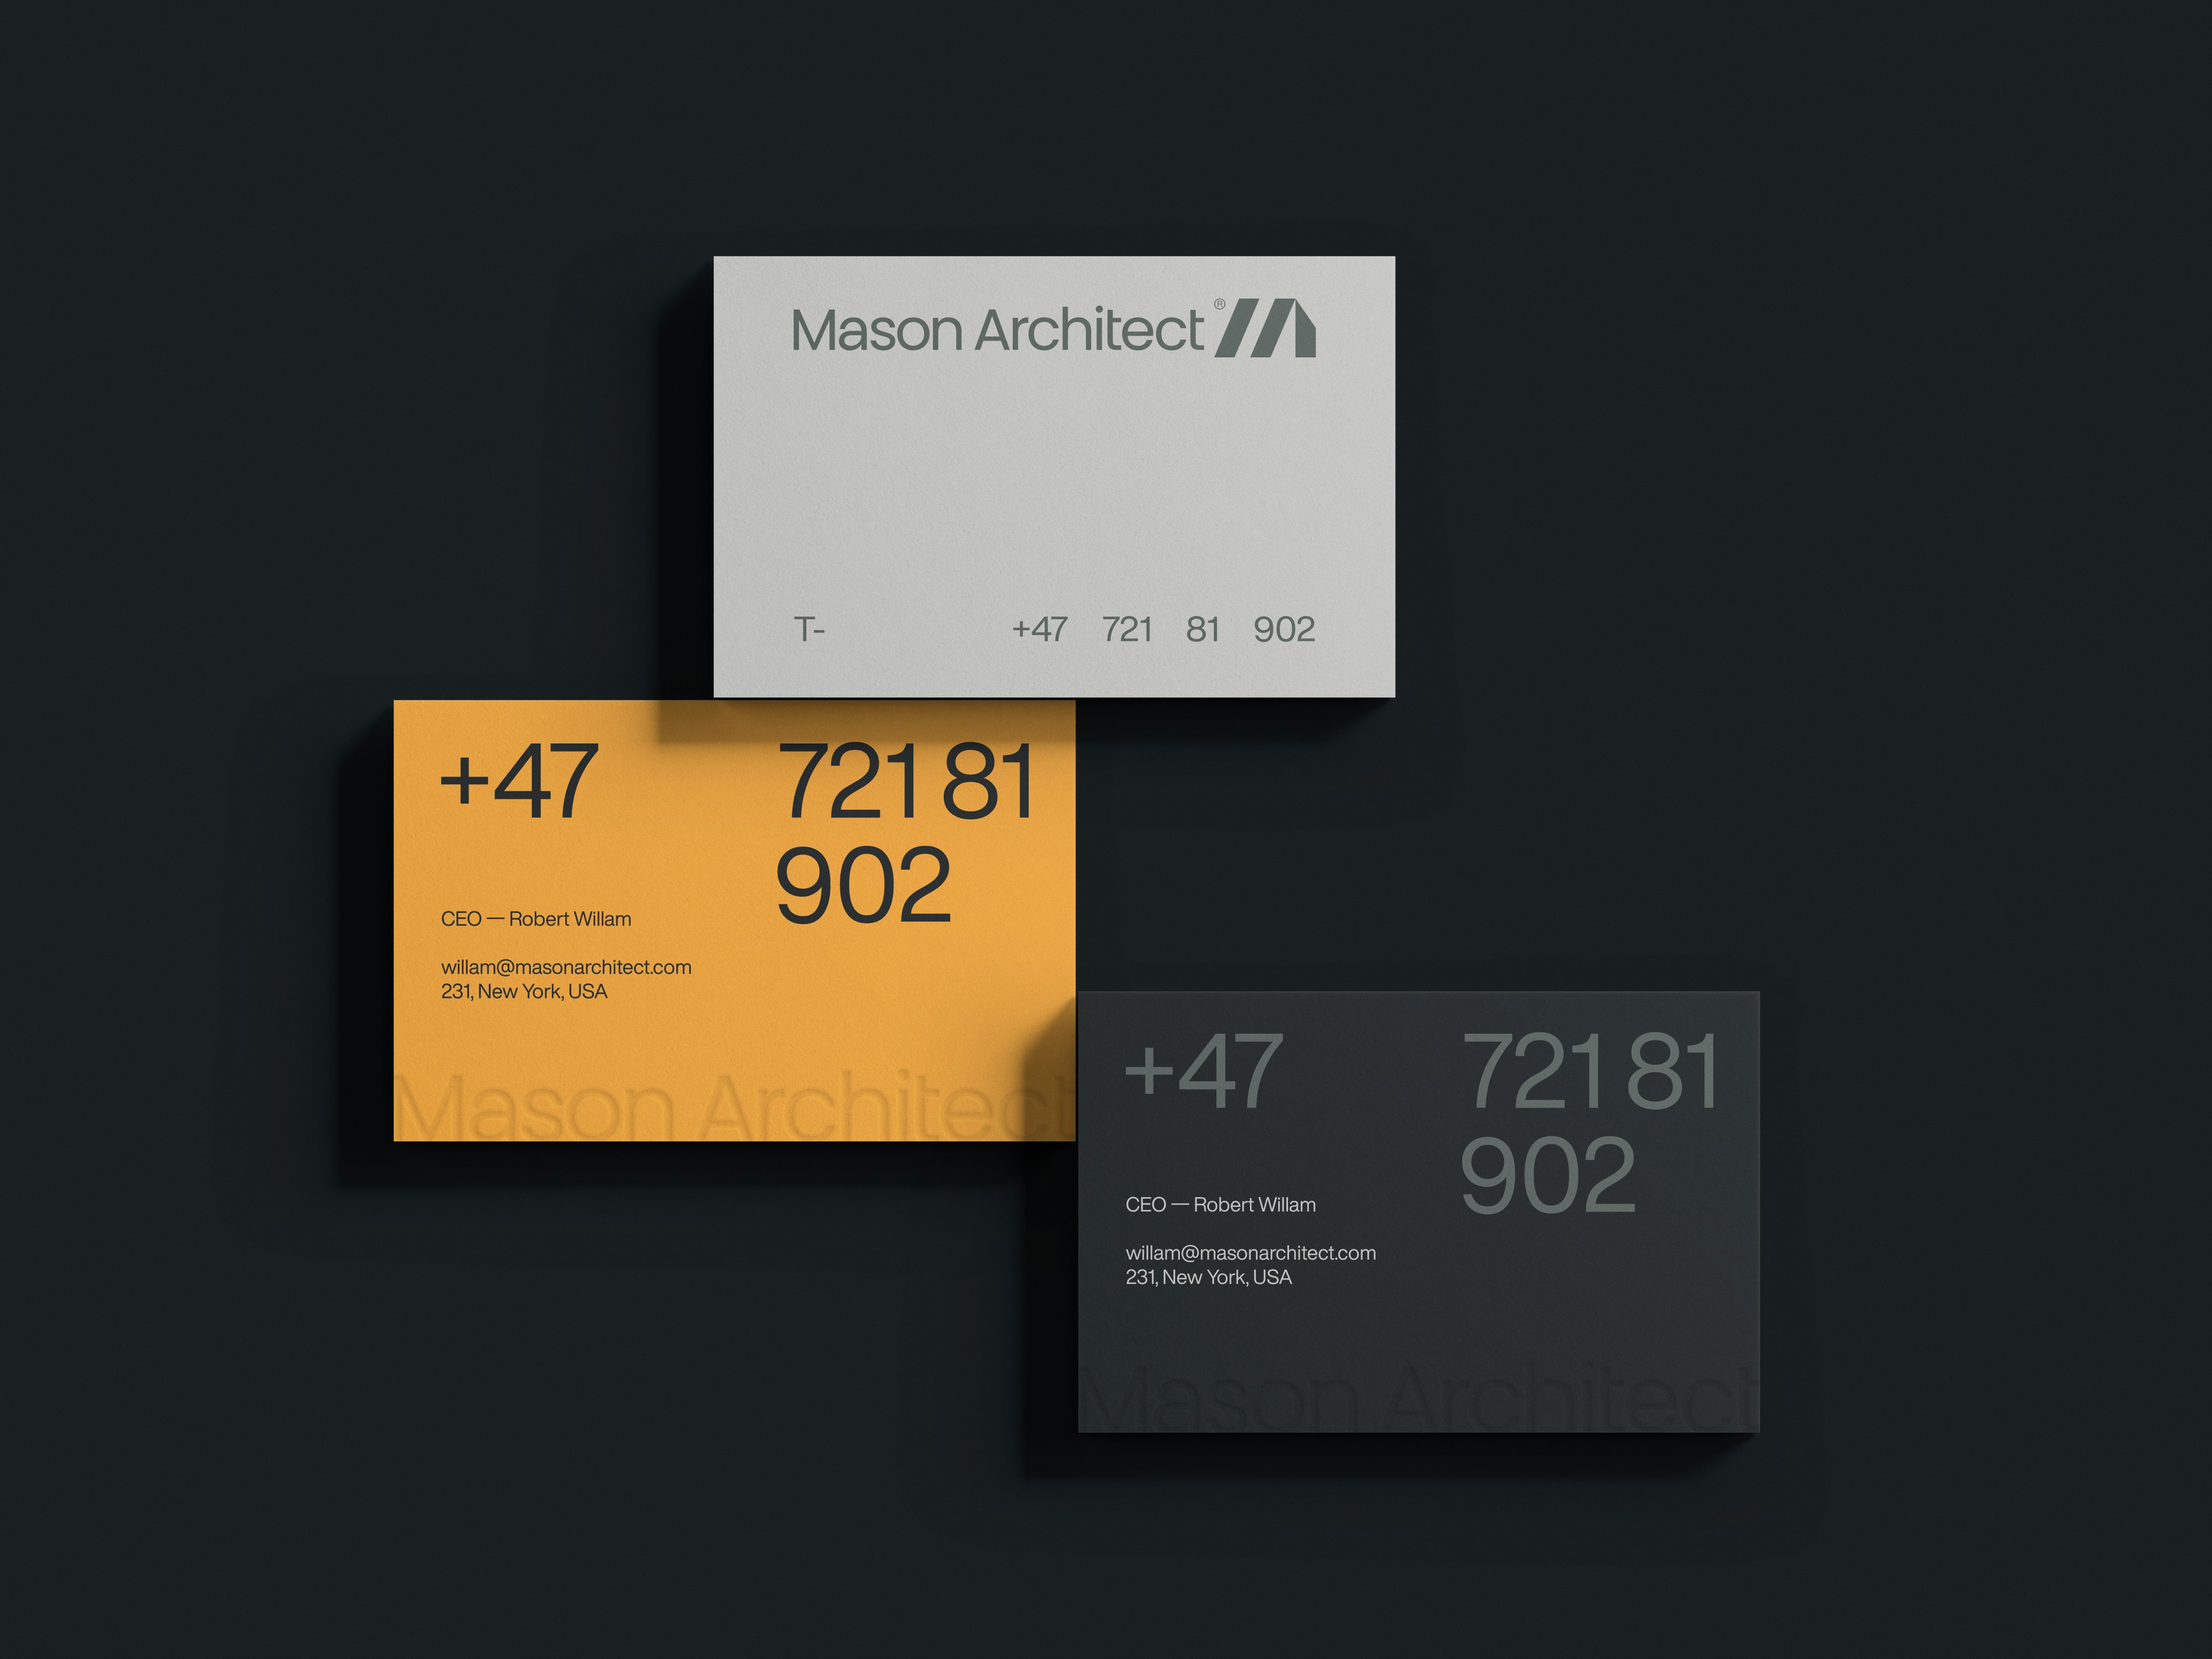 Mahmodul H. Sifat Transforms Mason Architect’s Visual Identity